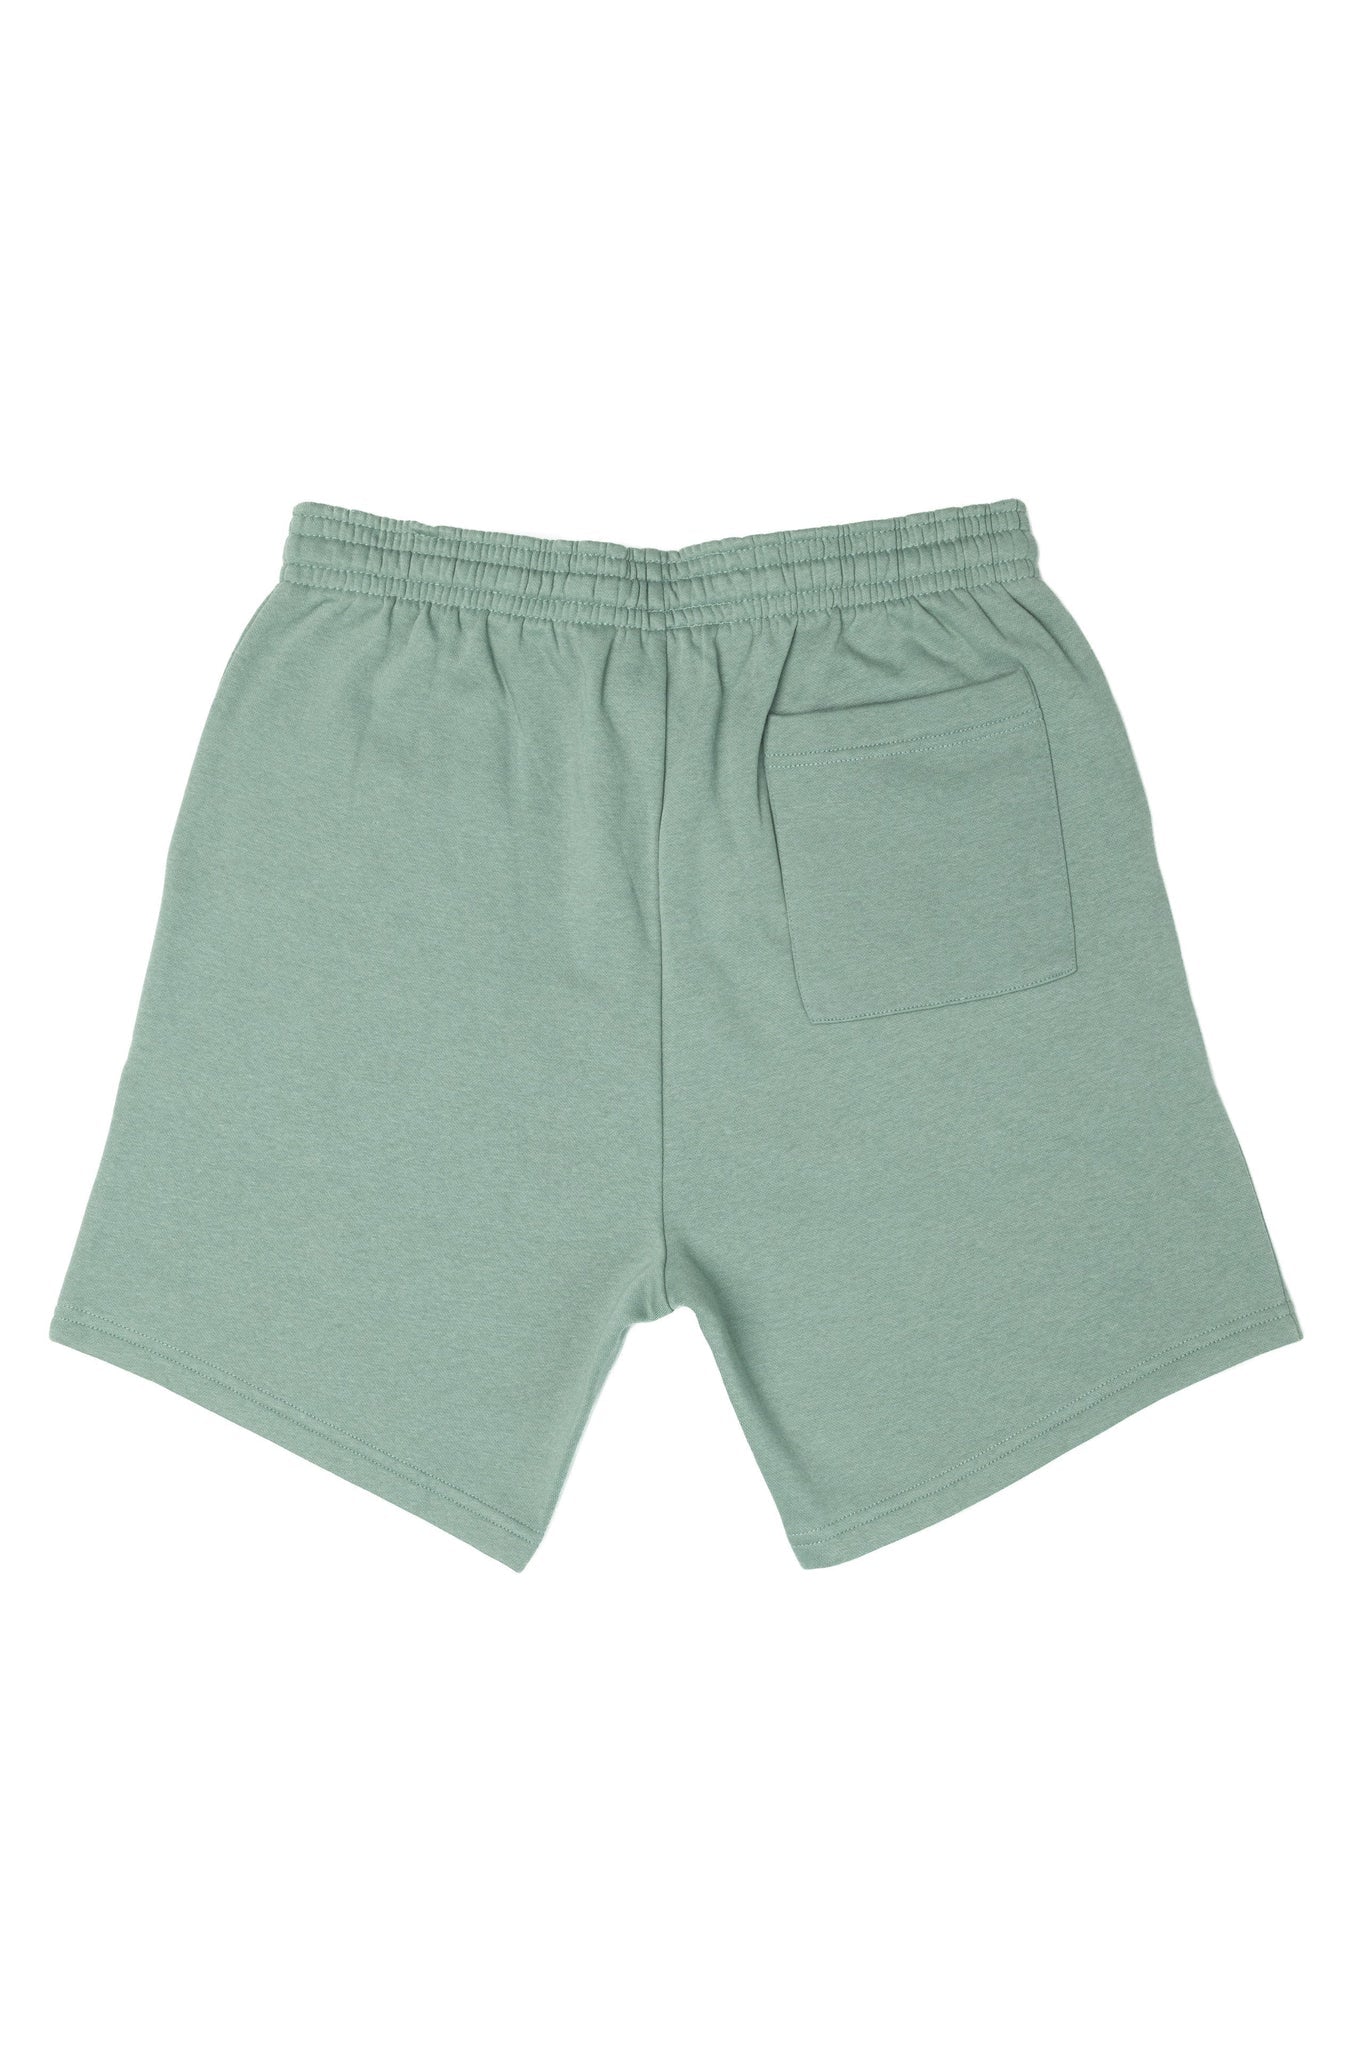 HERO - 6020 7’ Sweatshorts - Dusty Green Shorts